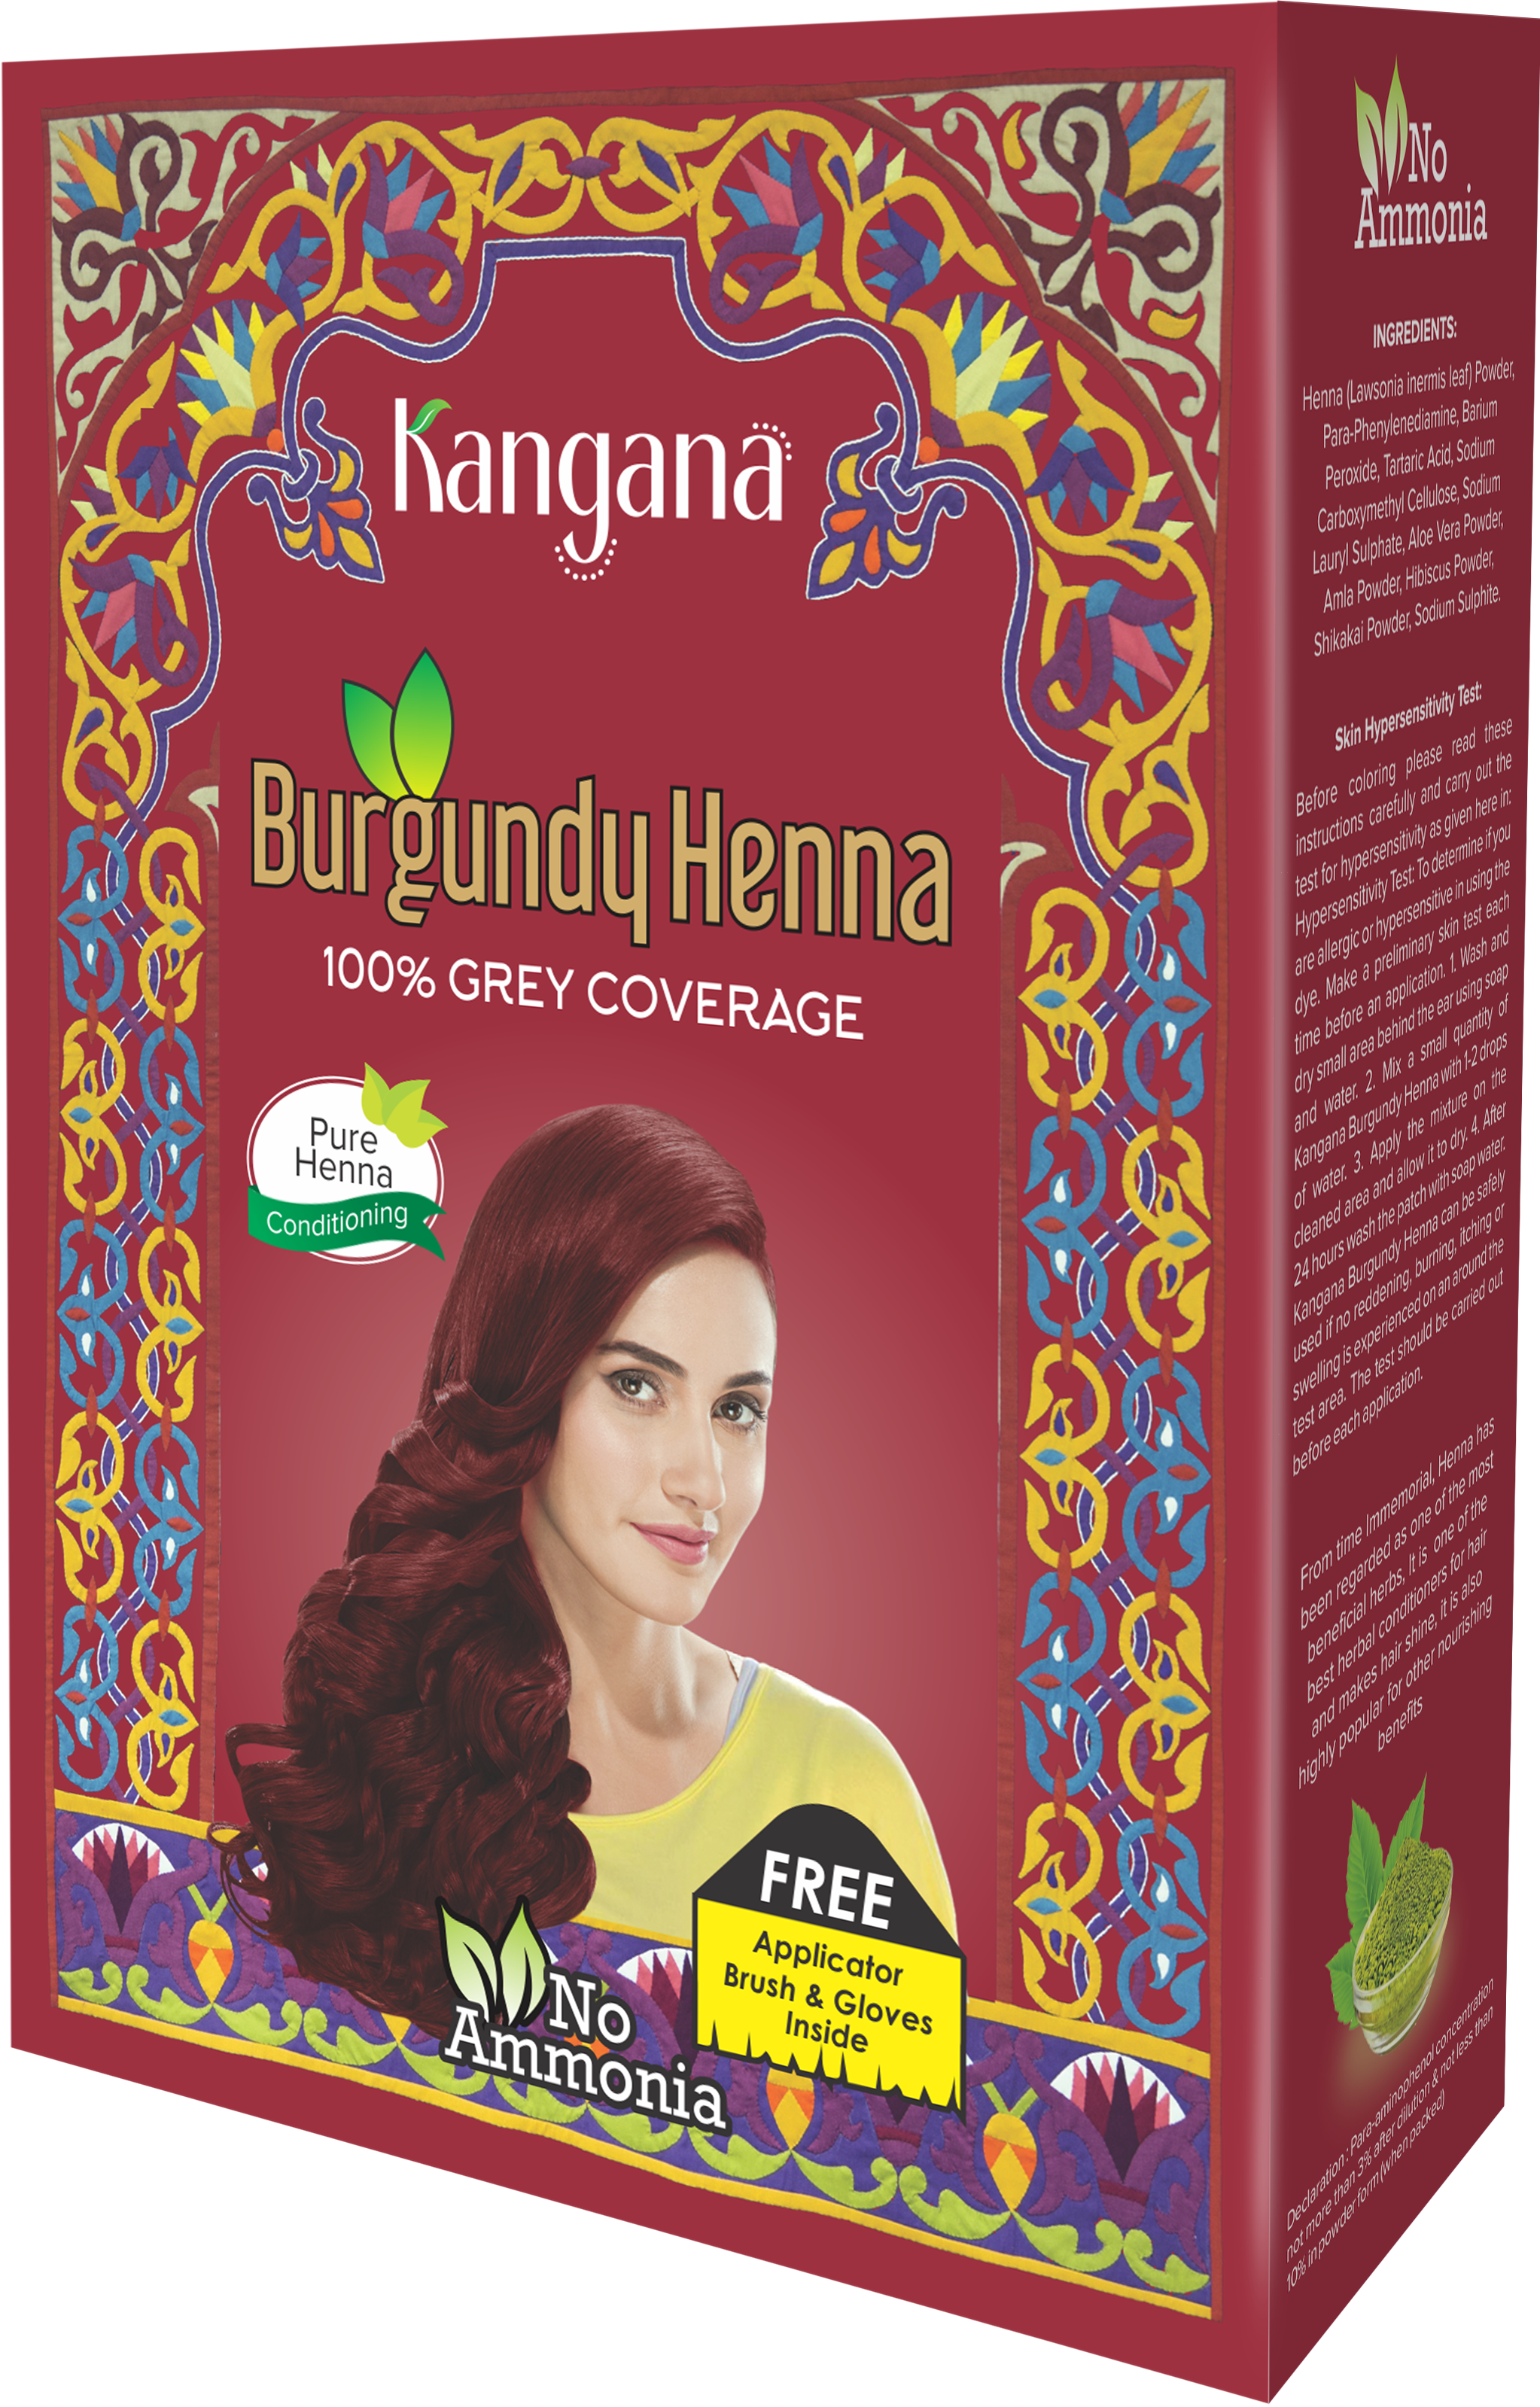 Herbul Burgundy Henna Hair Dye Review - YouTube